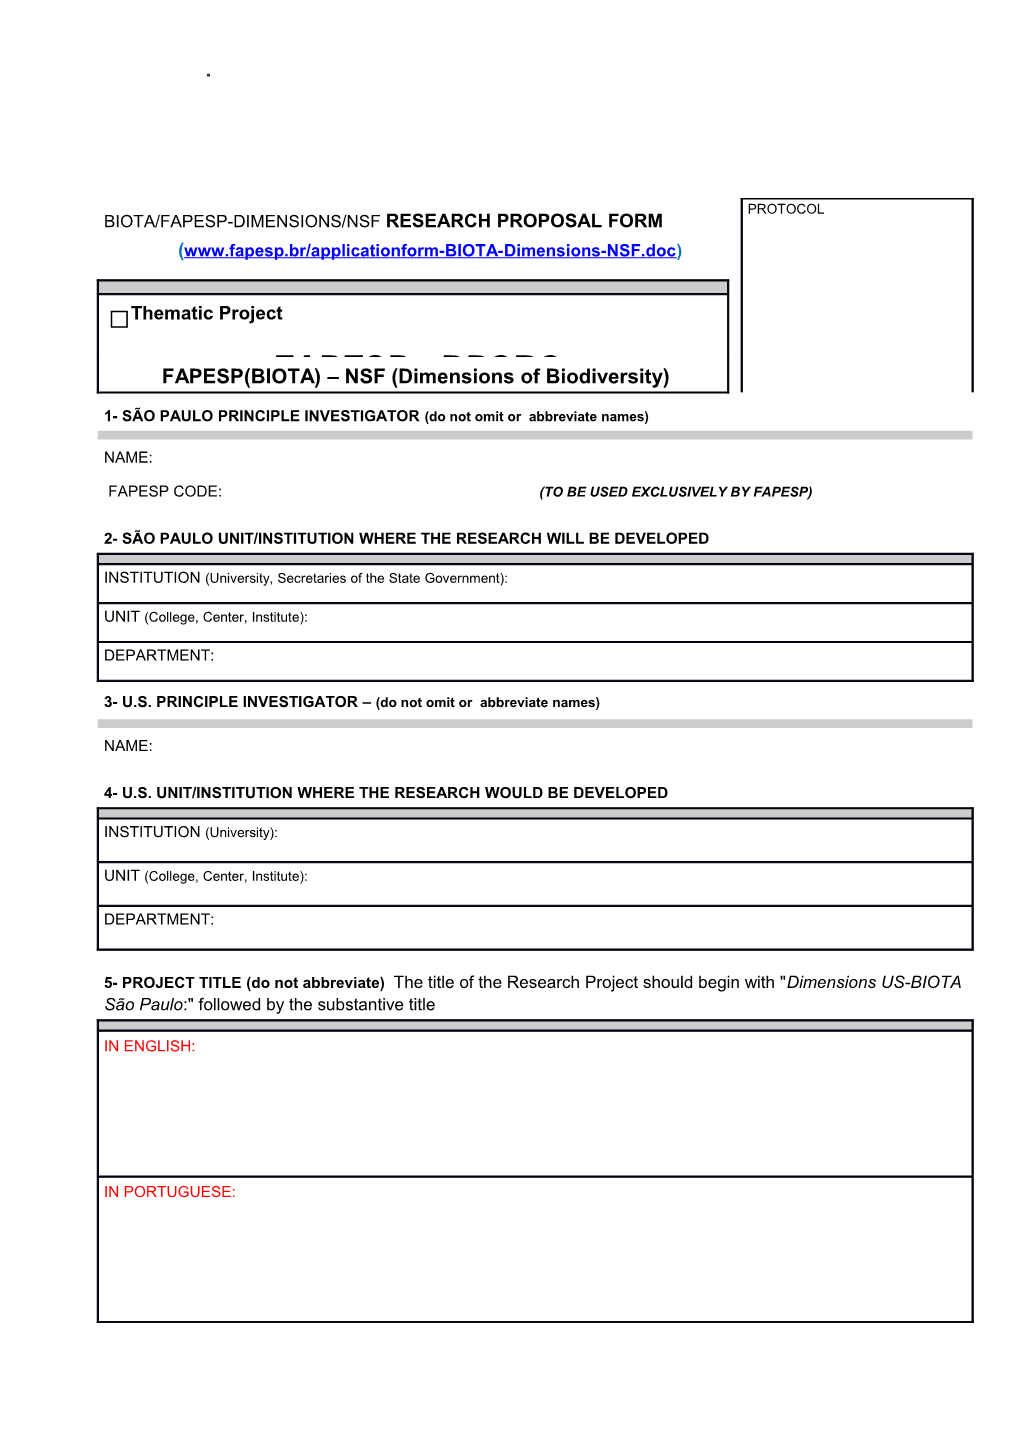 Biota/Fapesp-Dimensions/Nsf Research Proposal Form (